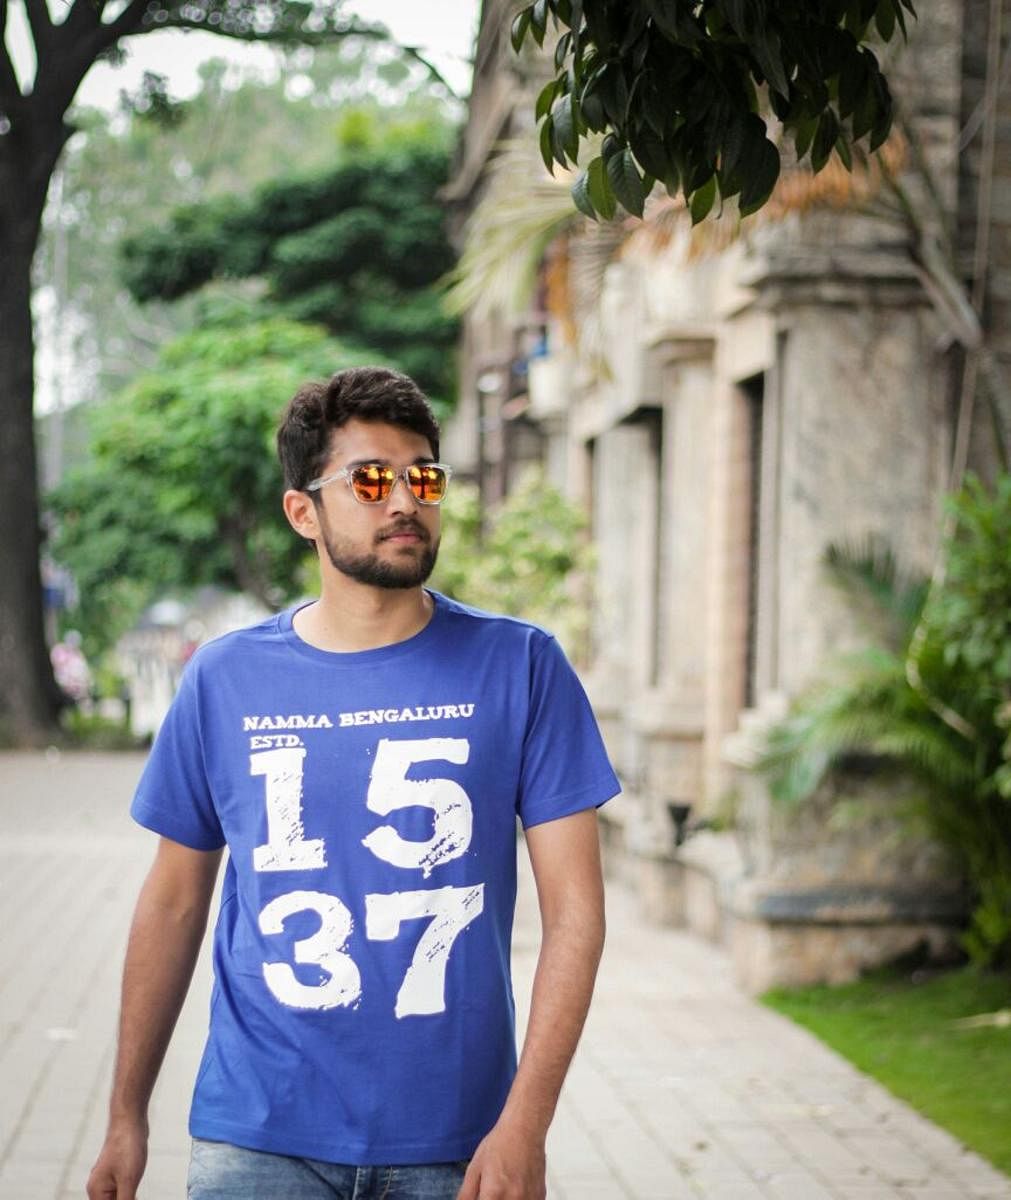 Year-end peak season for Kannada T-shirts, merch